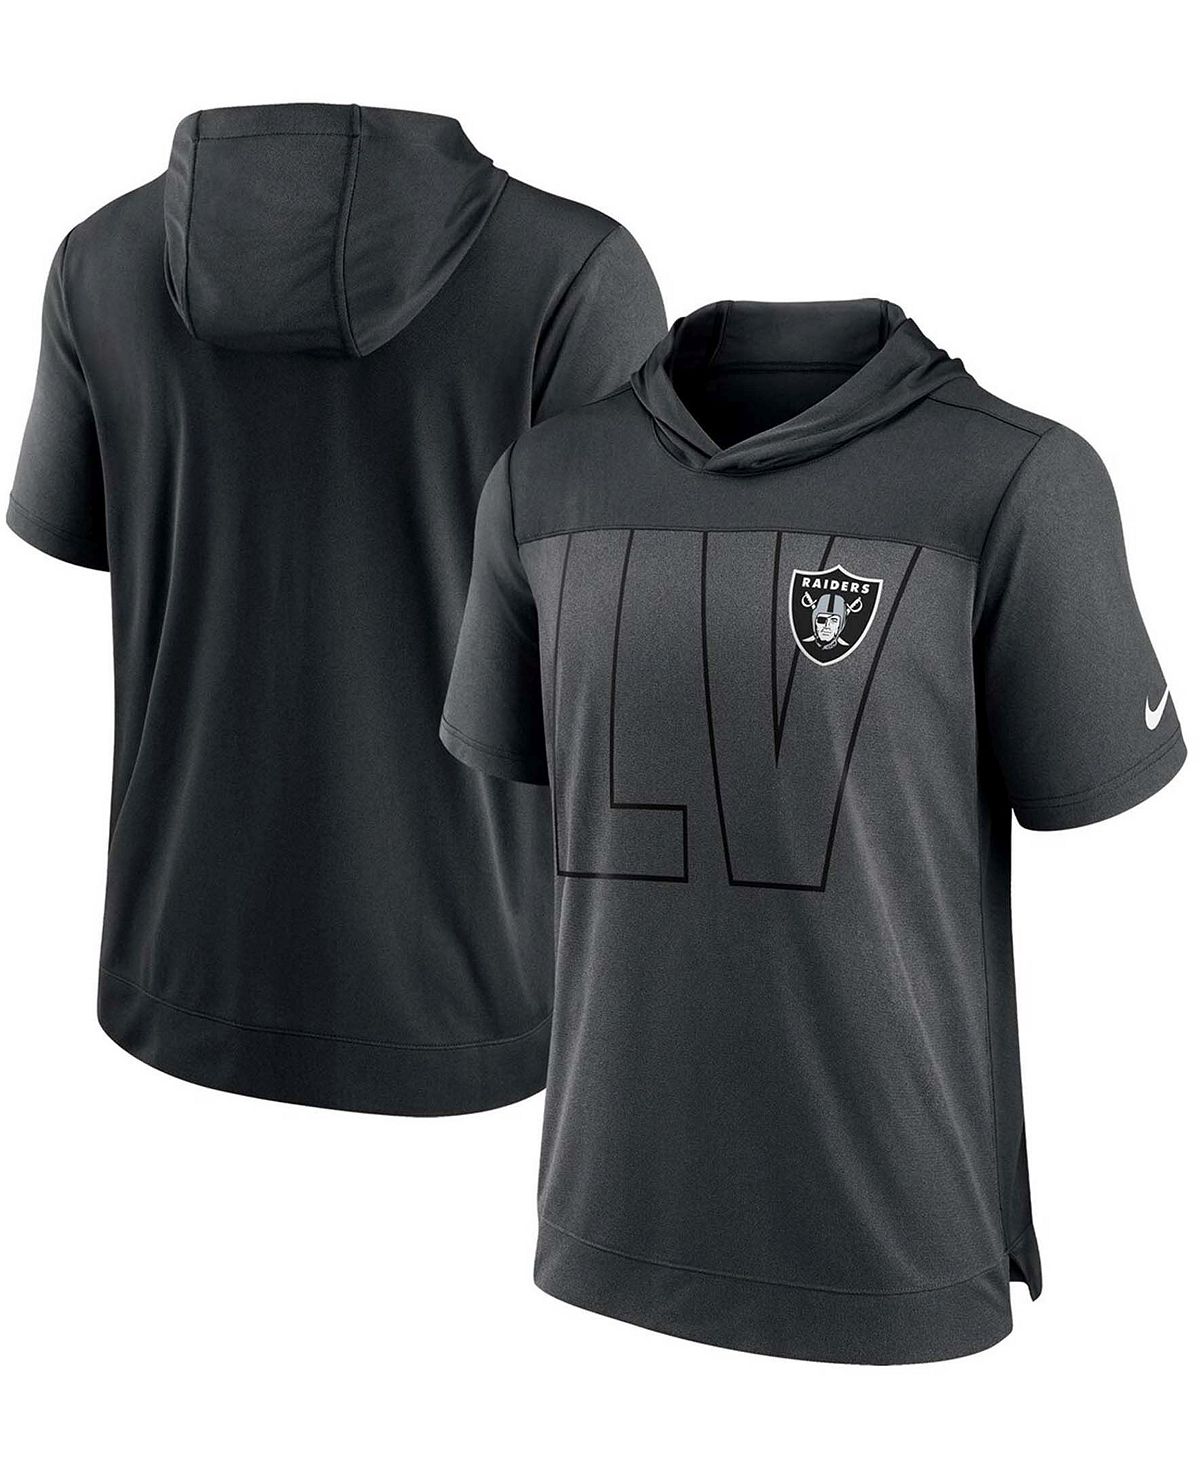 Мужская темно-серая, черная футболка с капюшоном las vegas raiders performance Nike, мульти